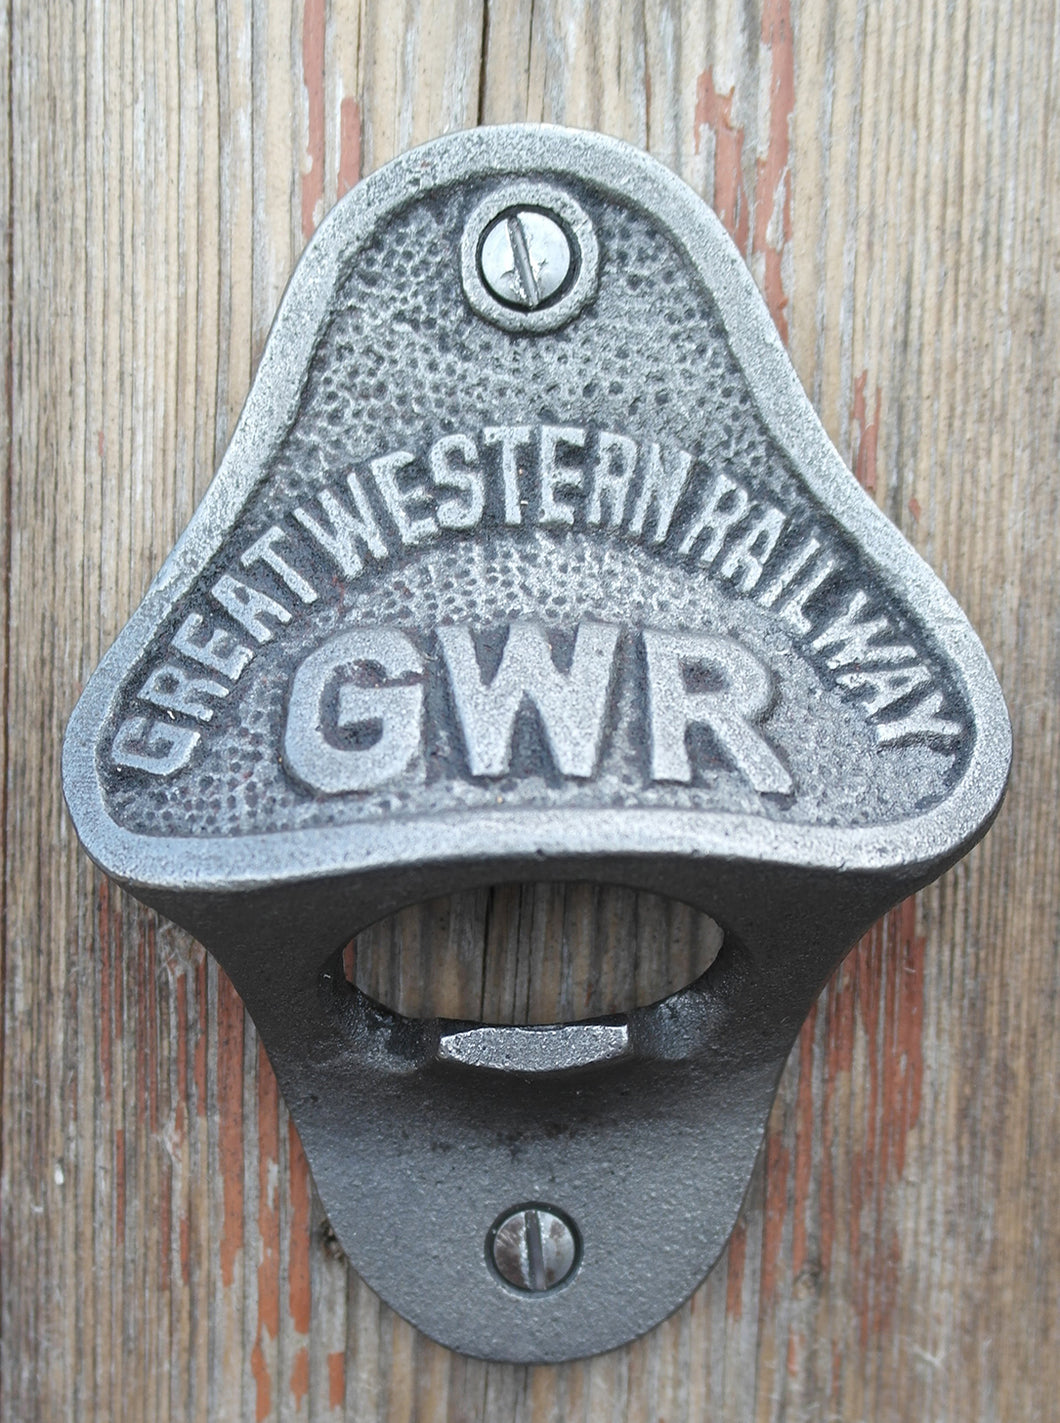 Cast Iron antique style Great Western Railway Bottle Opener